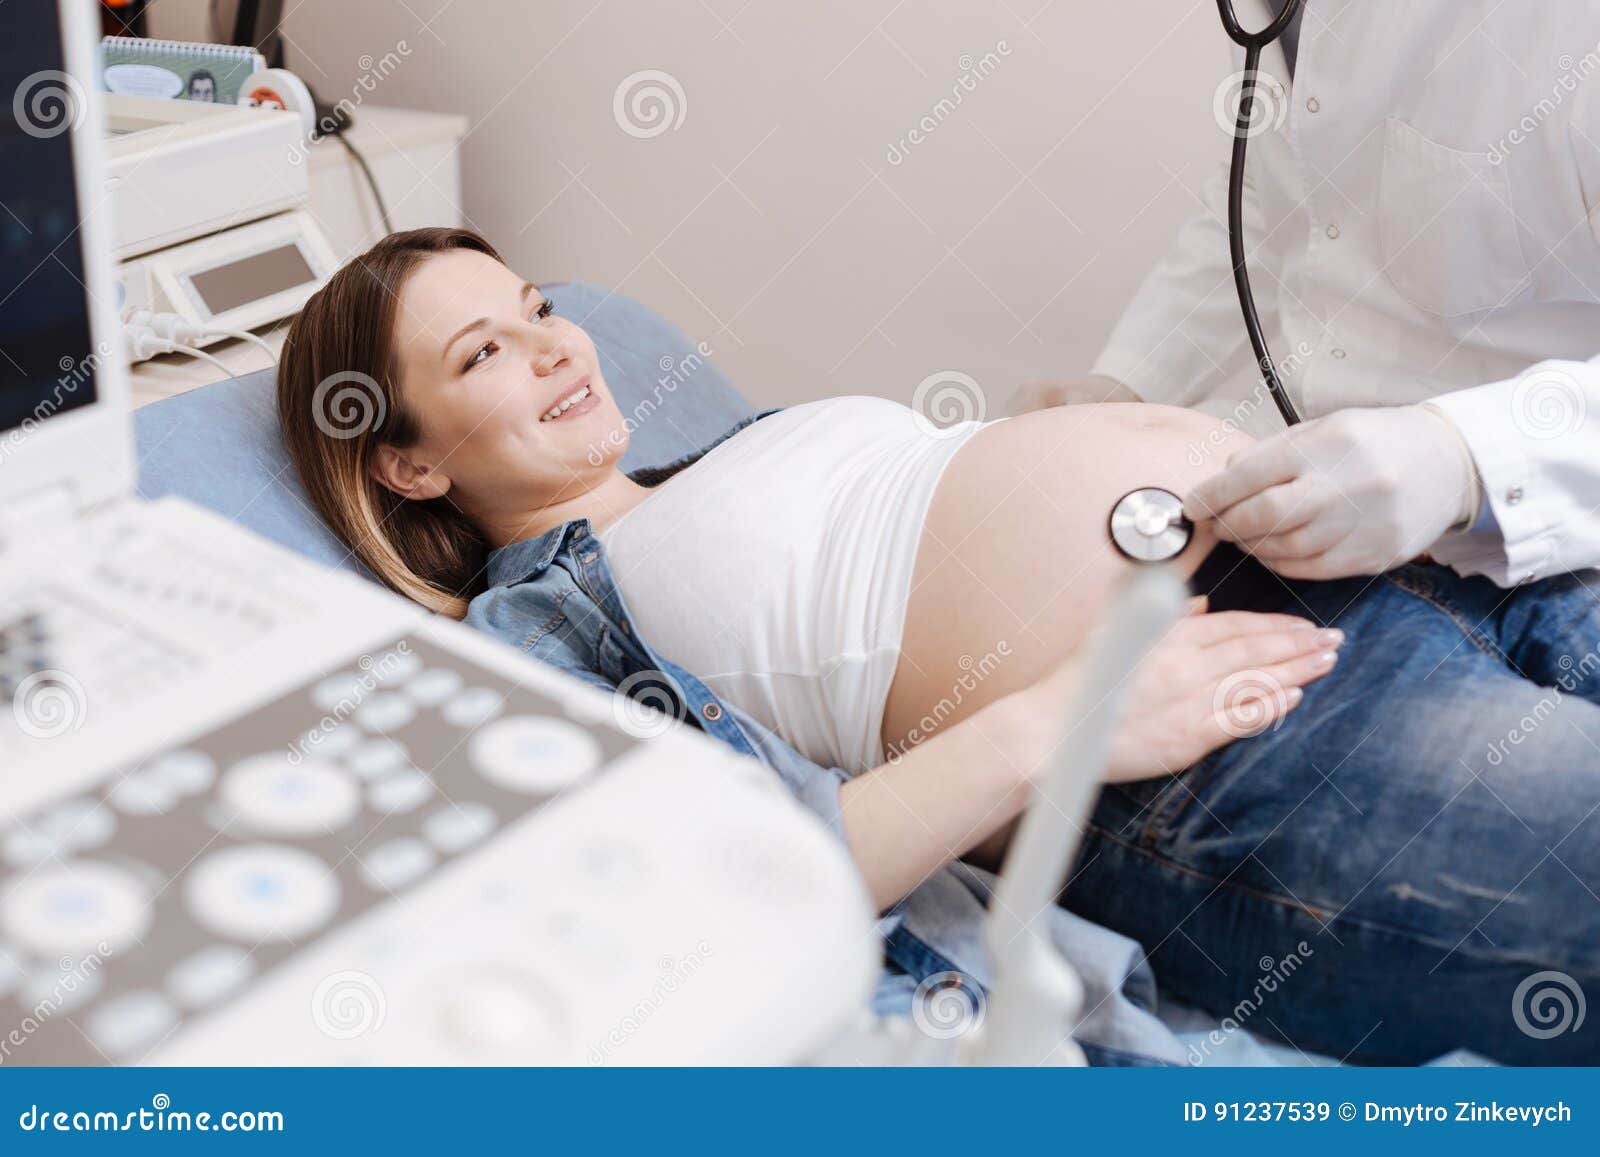 pregnant hospital selfie :p